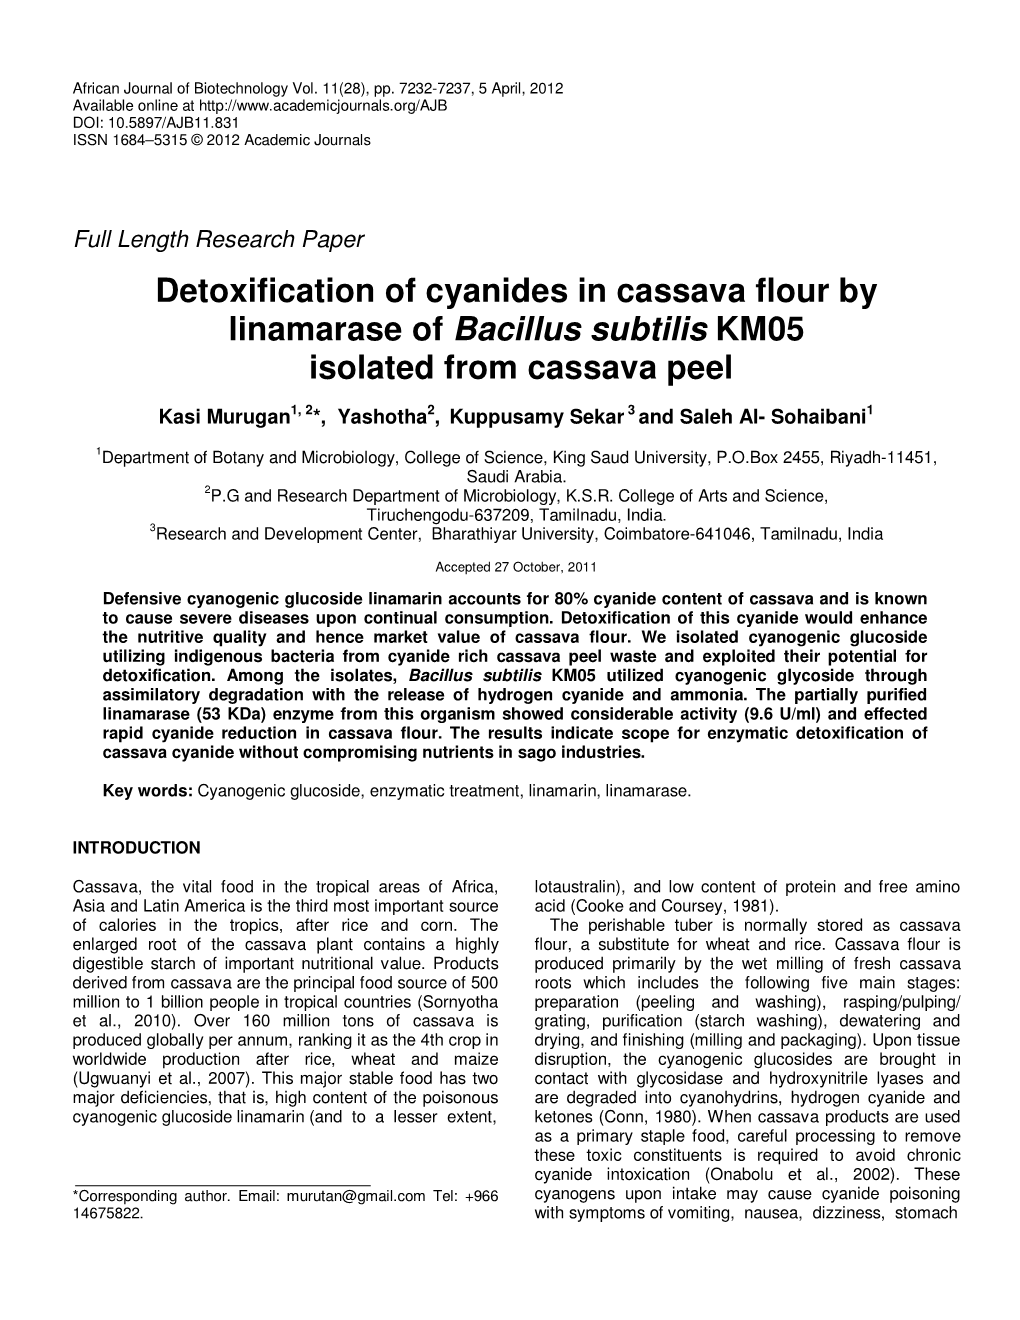 Detoxification of Cyanides in Cassava Flour by Linamarase of Bacillus Subtilis KM05 Isolated from Cassava Peel